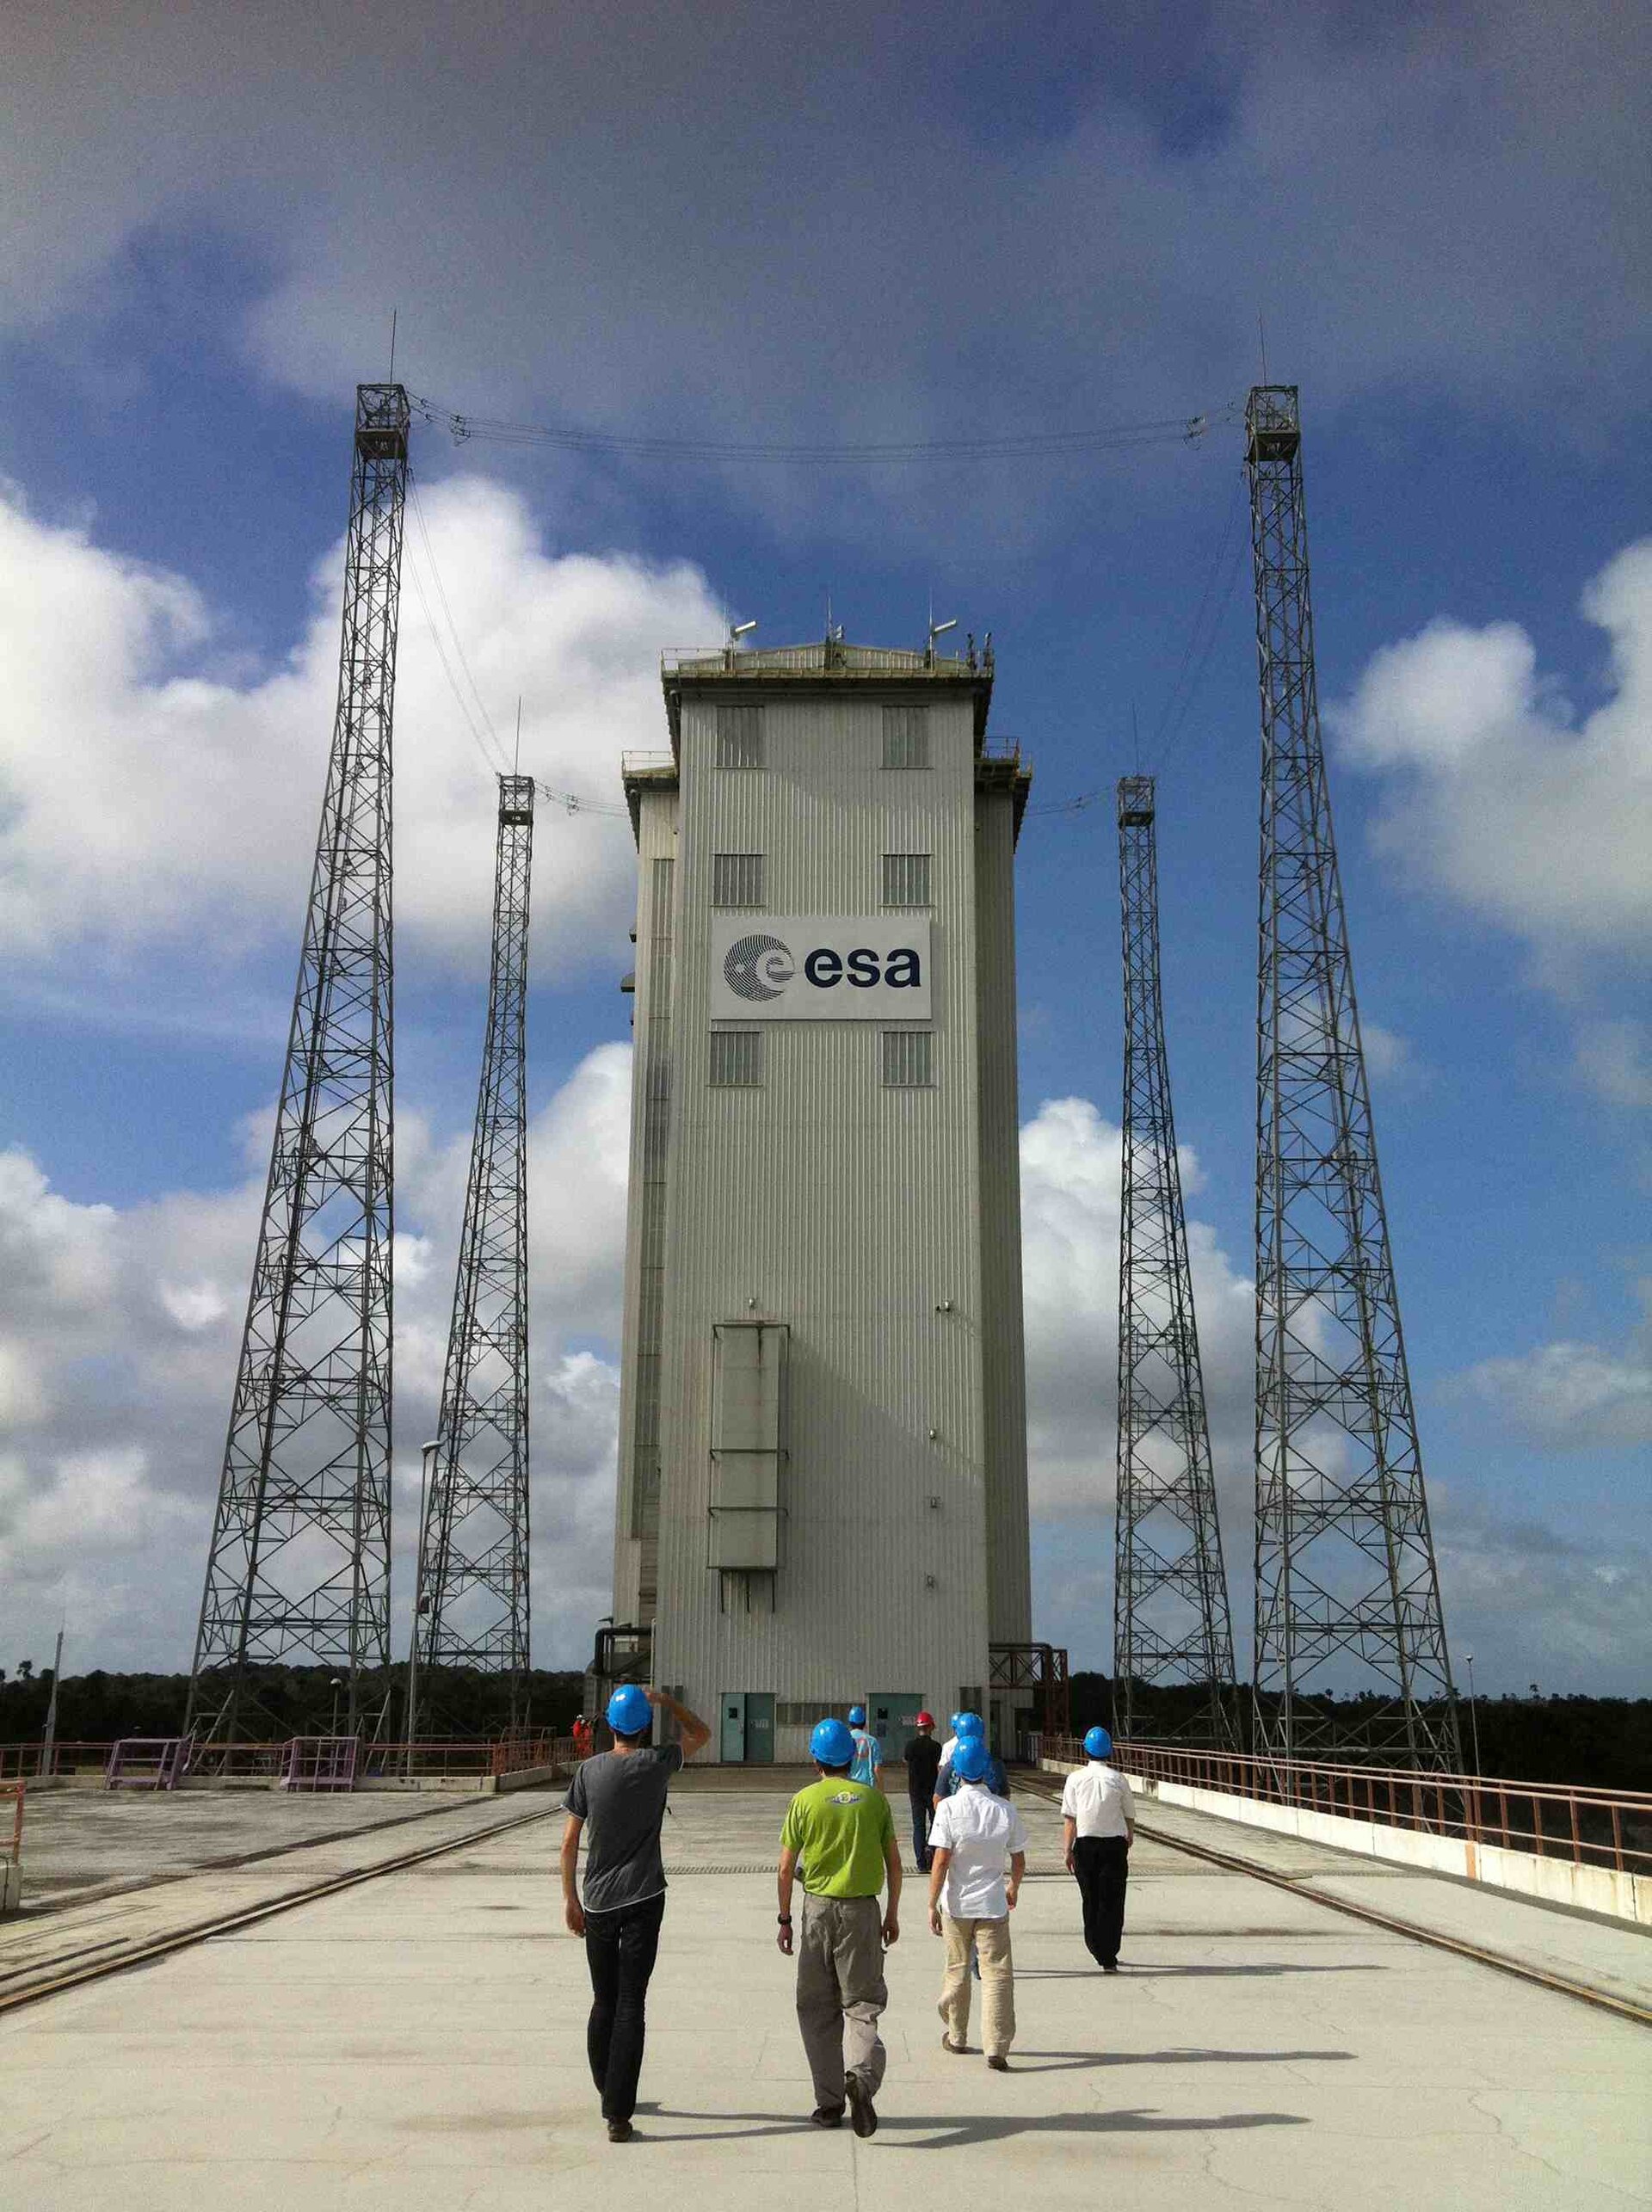 Proba-V team visit the Vega mobile launch tower